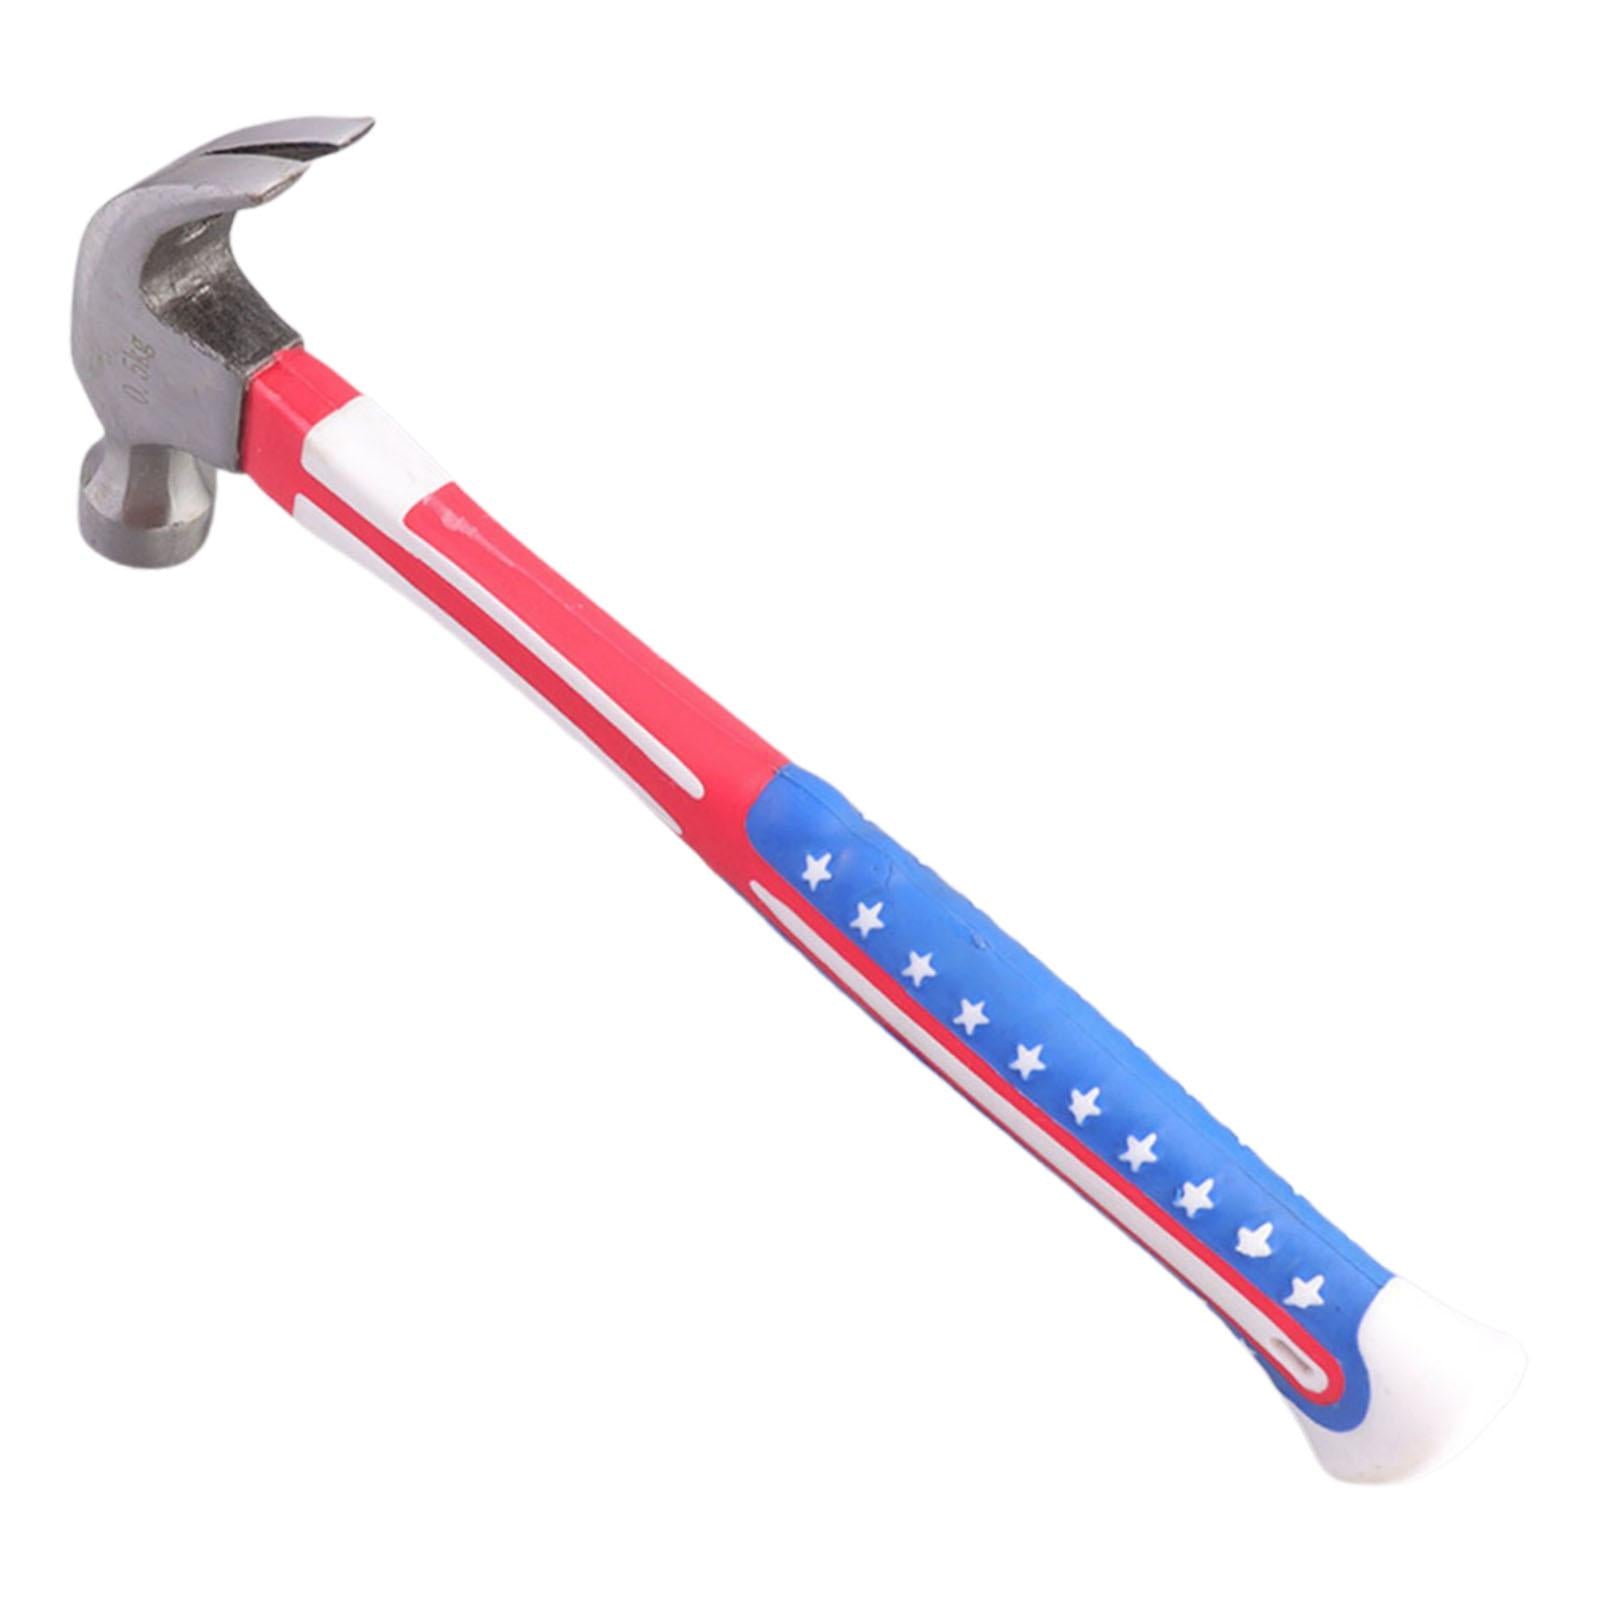 Claw Hammer Stubby Hammer Camping Hammer Small Hammer Nail Hammer Hand Tools